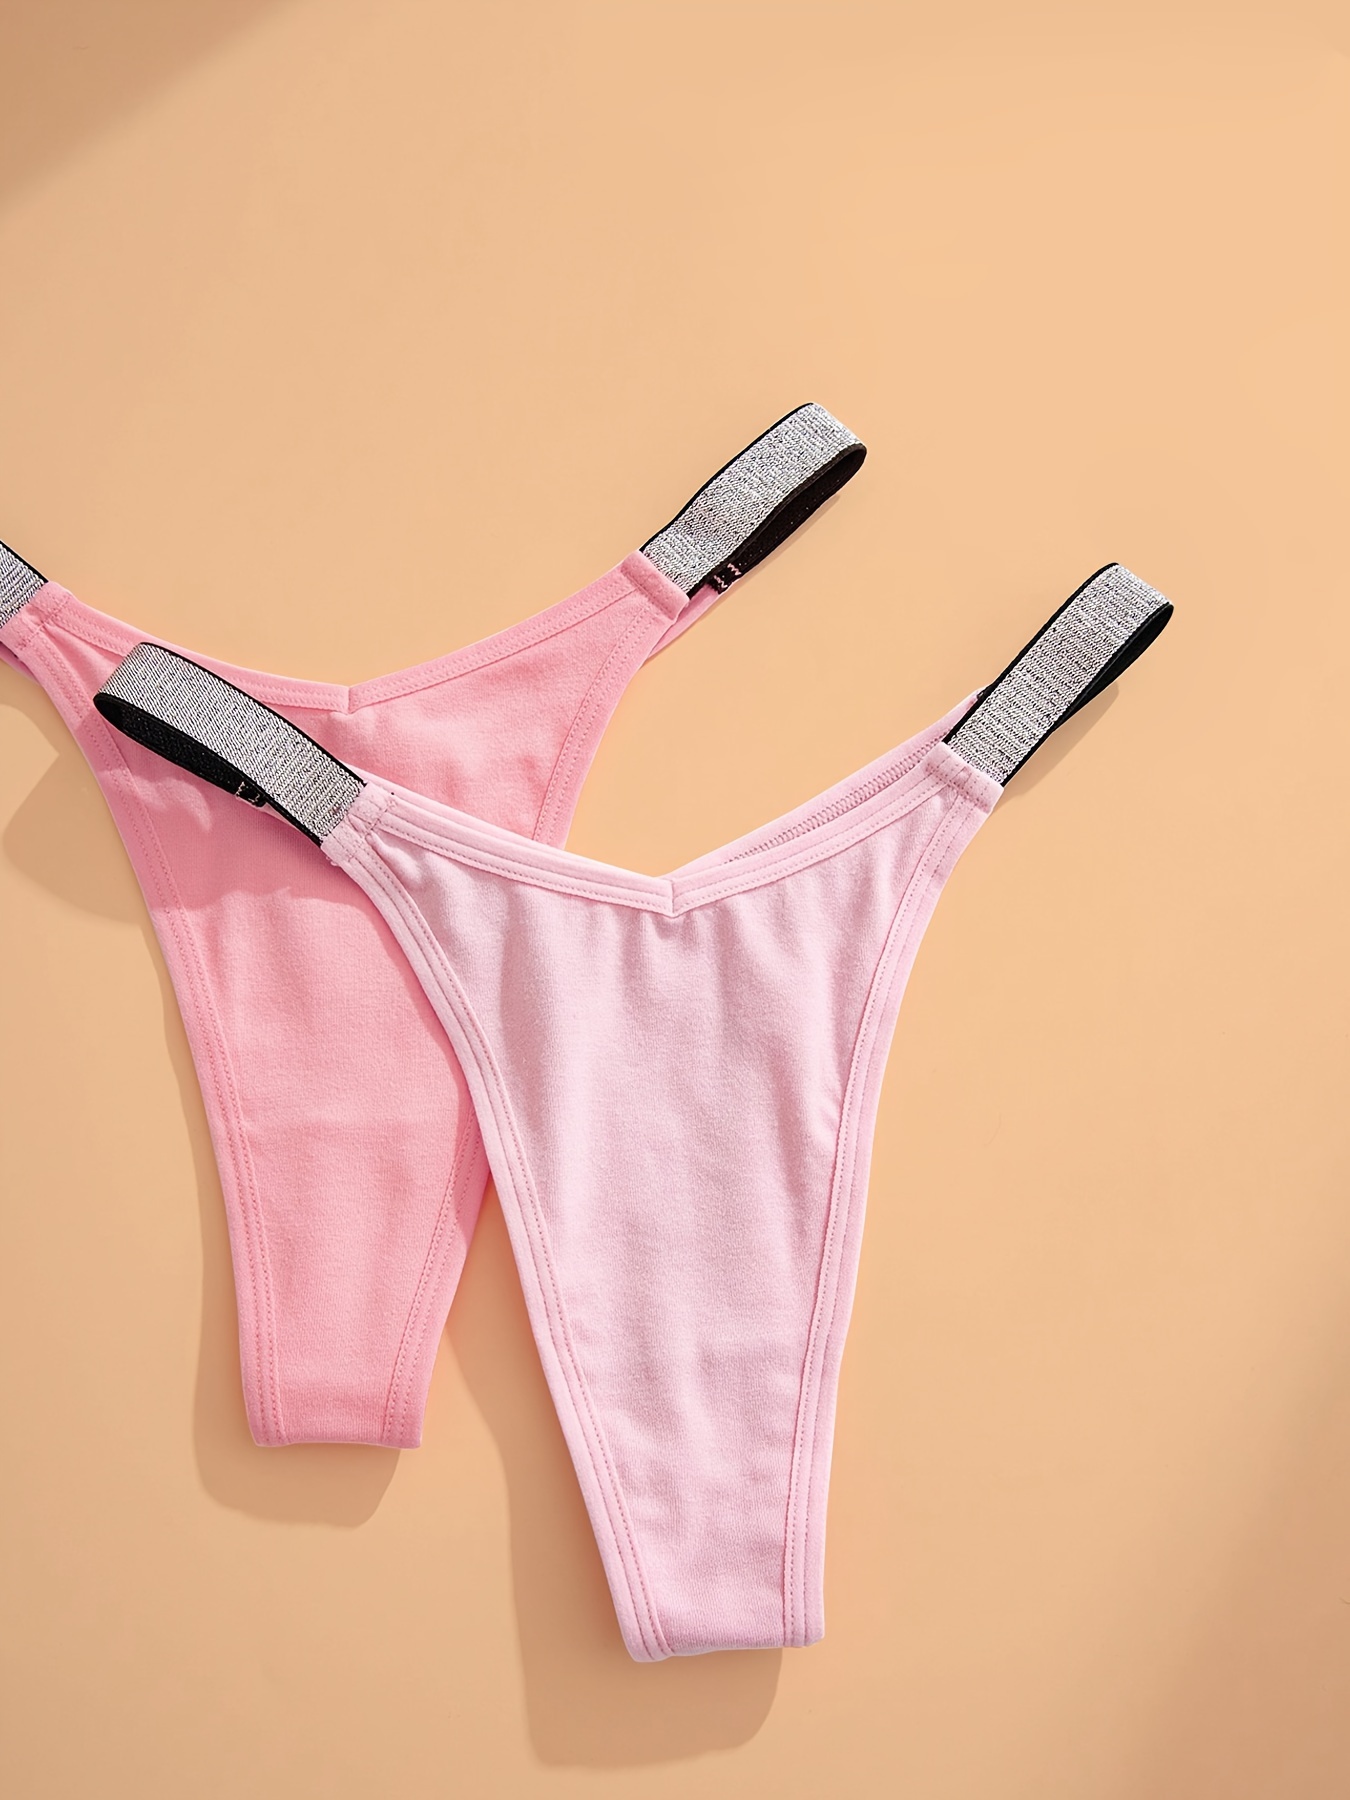 7 Pcs Sexy Thongs, Silver Glitter Strap Cheeky Intimates Panties, Women's  Lingerie & Underwear